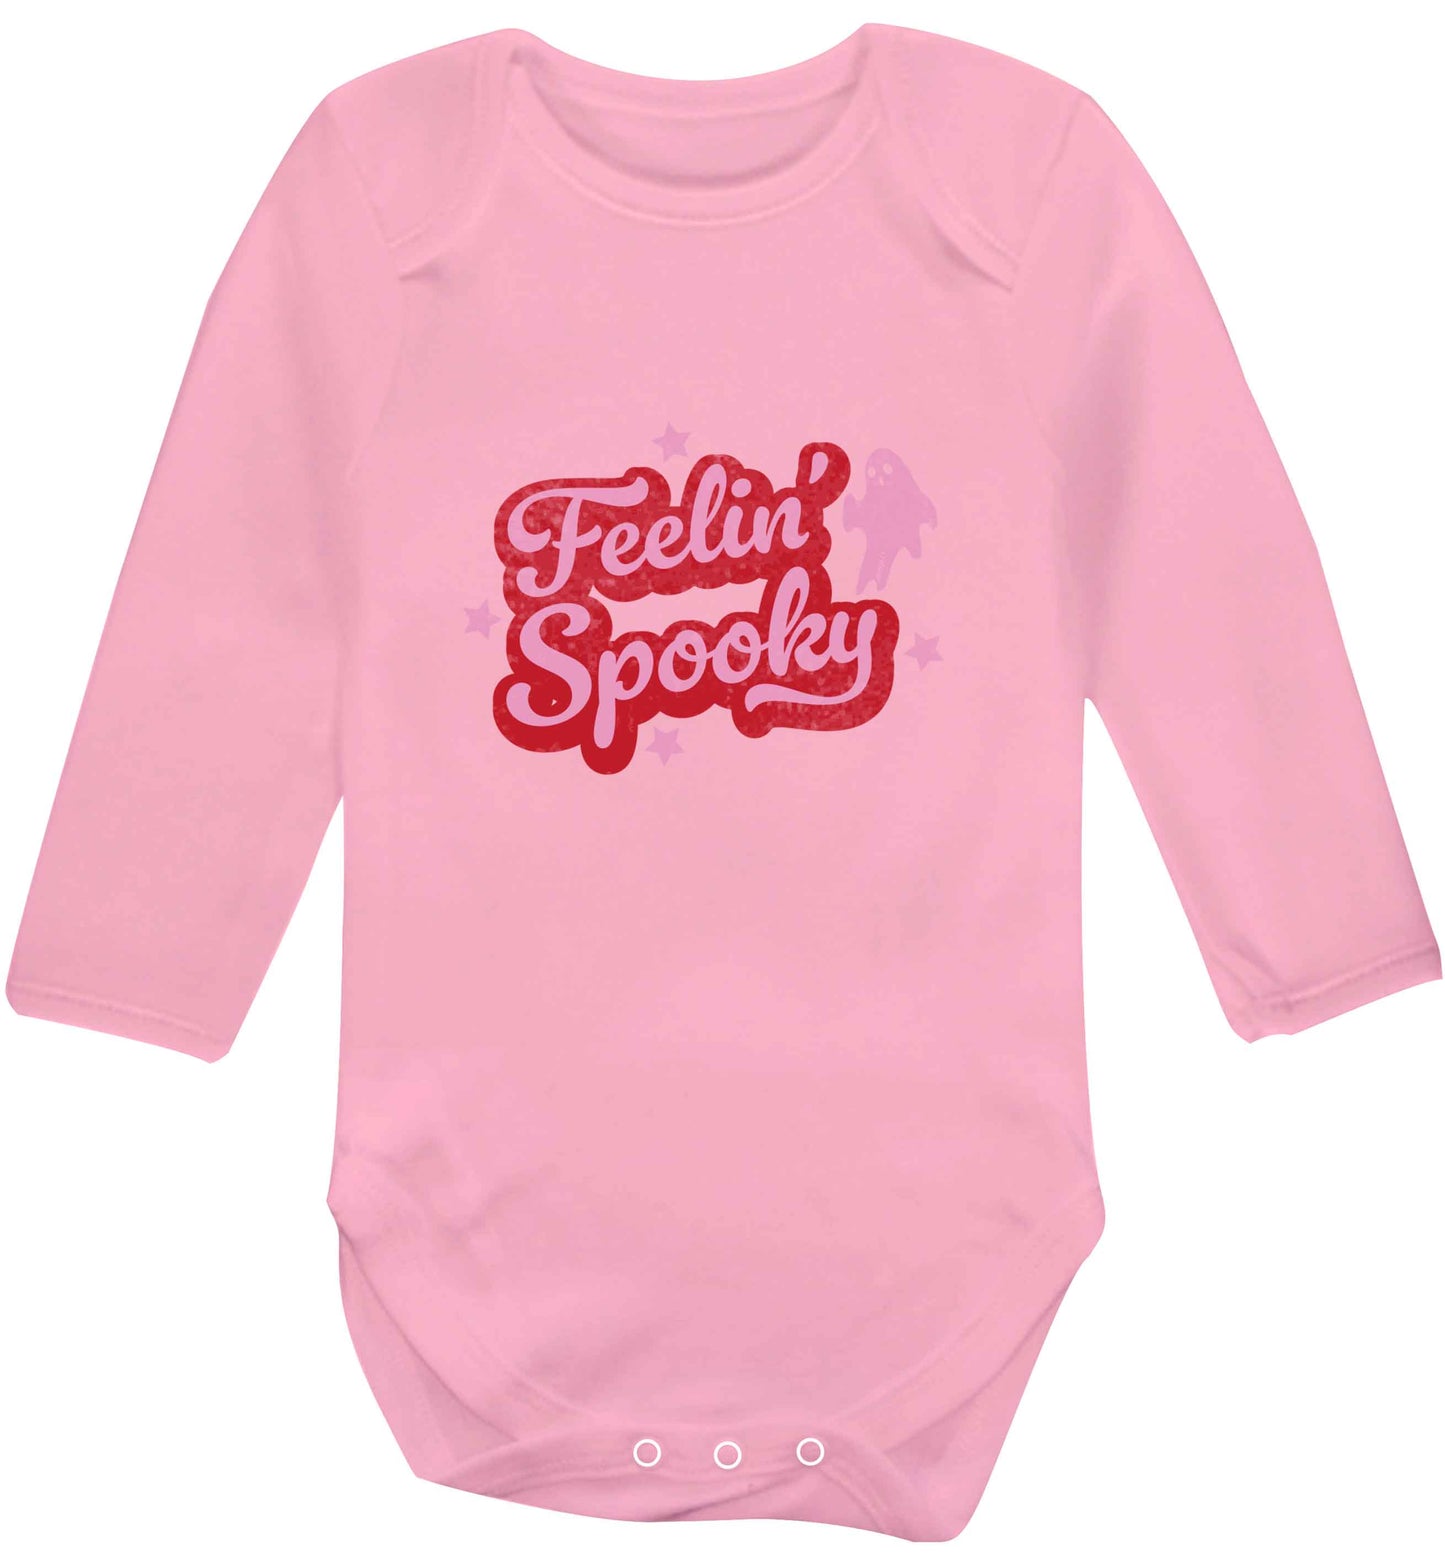 Feelin' Spooky Kit baby vest long sleeved pale pink 6-12 months